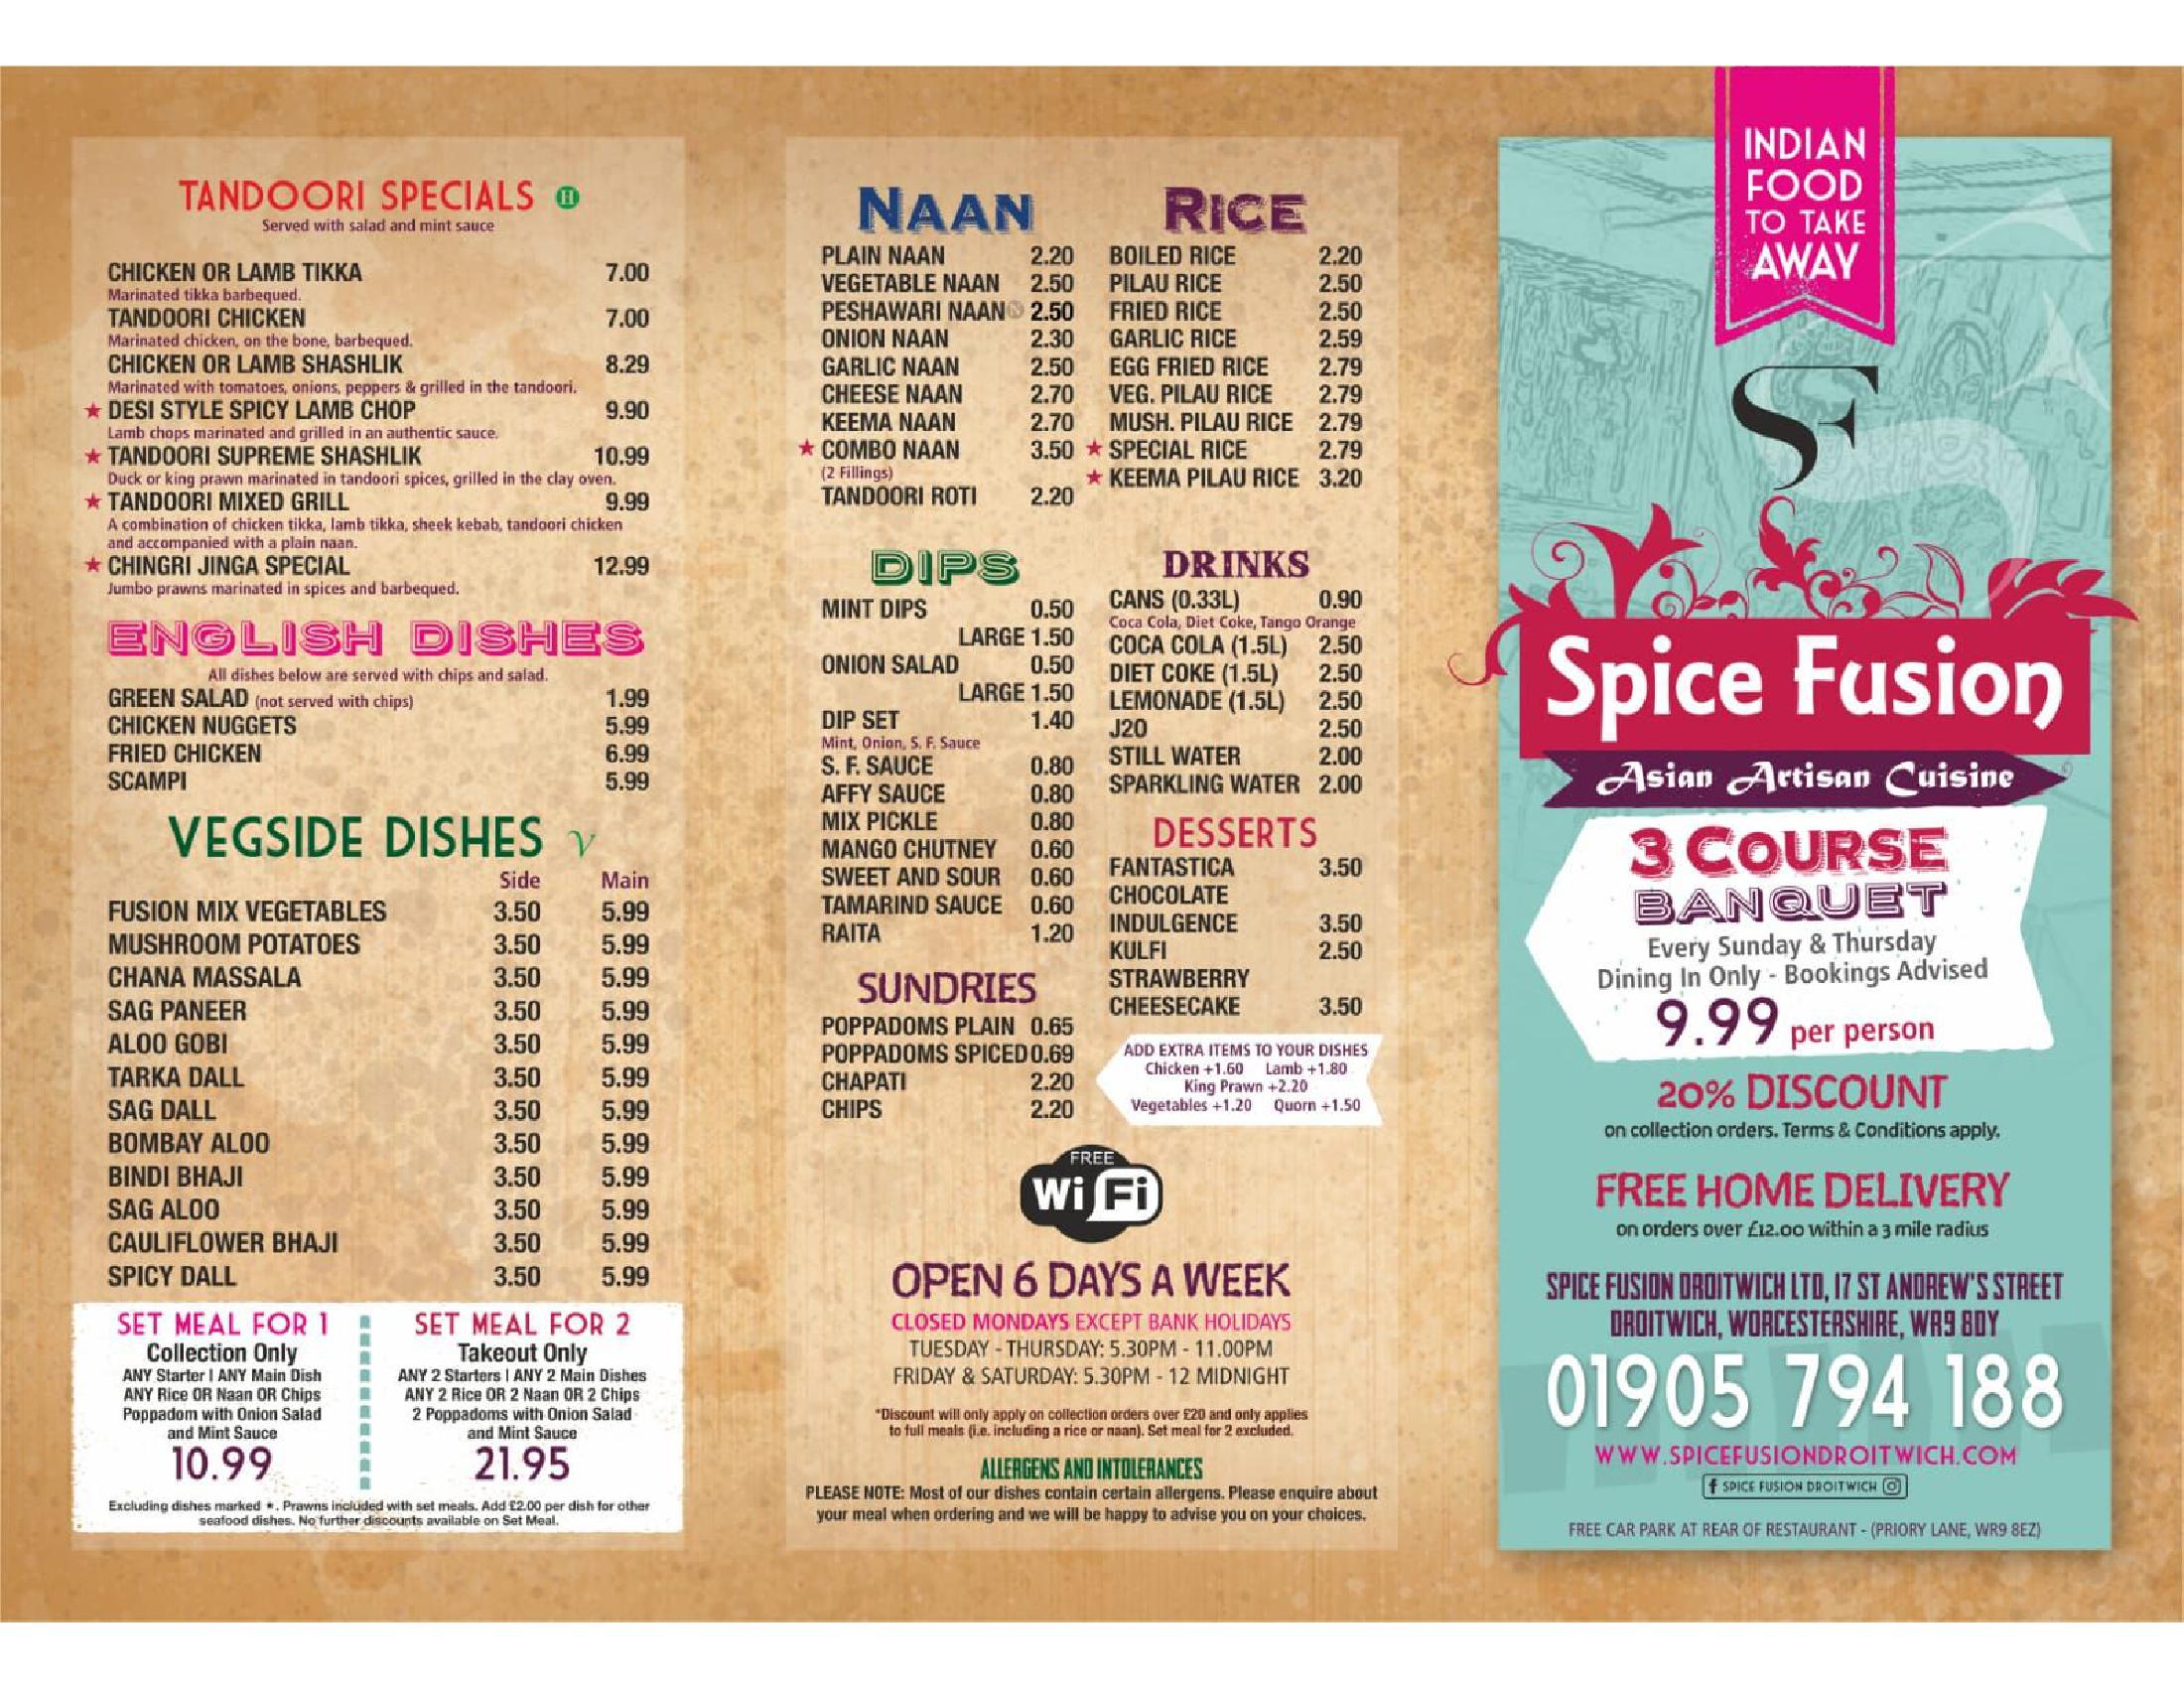 Spice Fusion Indian Droitwich - main menu